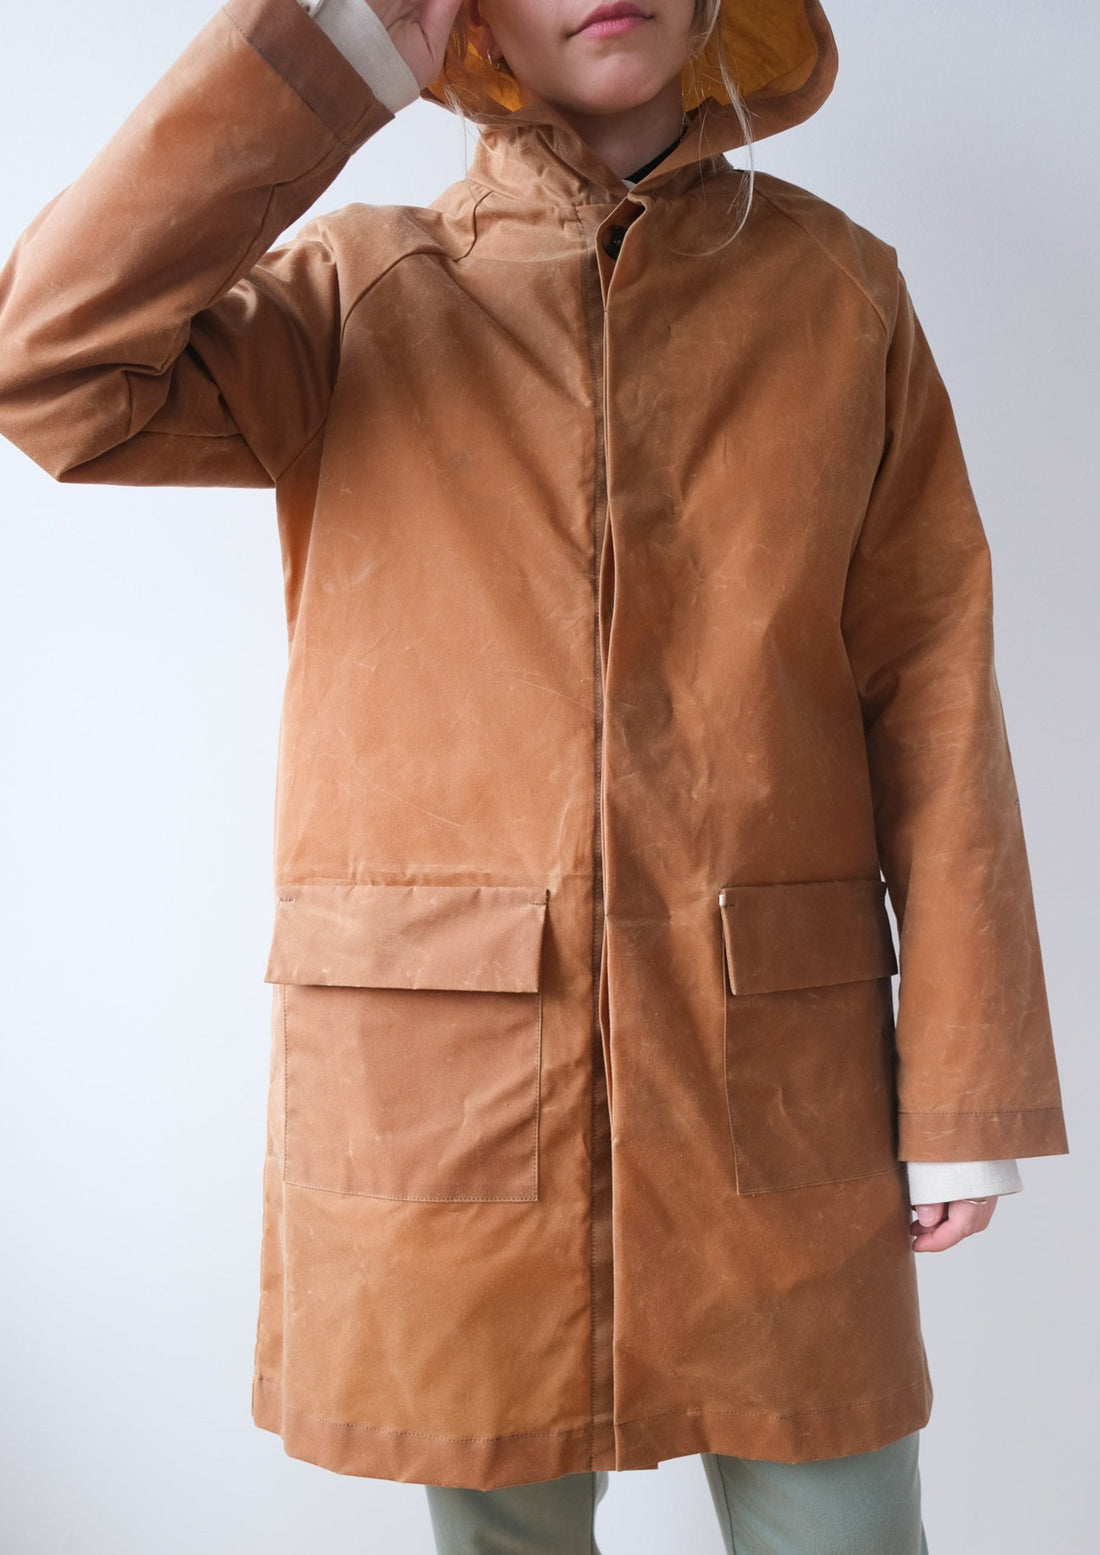 Unisex waxed raincoat No6021u